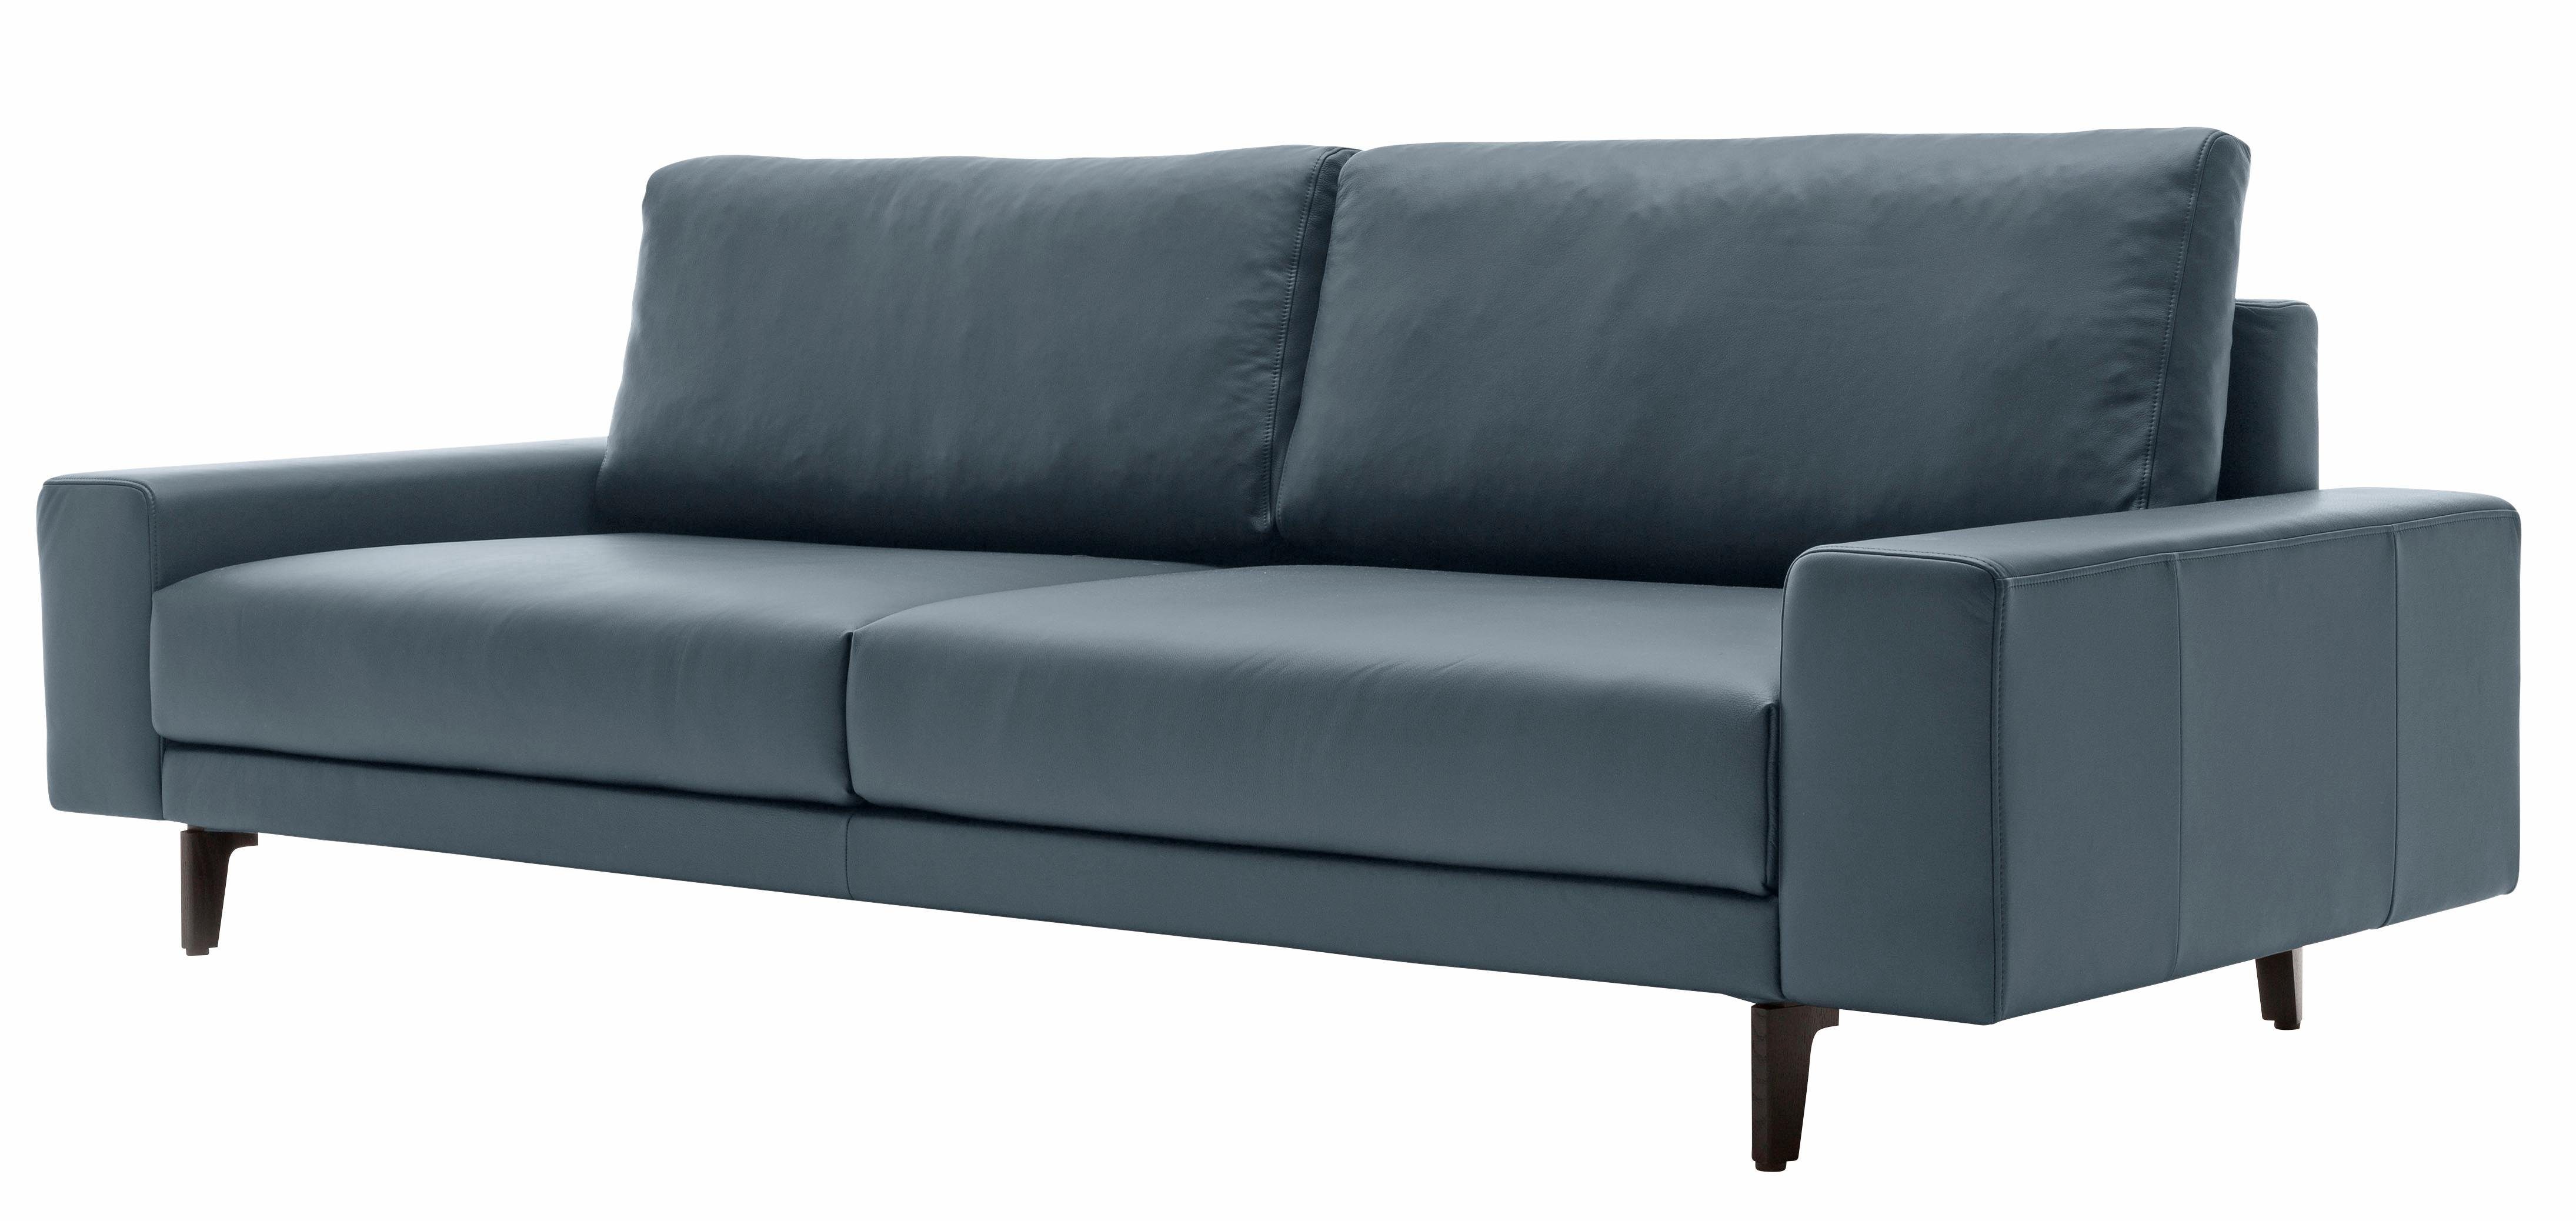 hülsta Breite umbragrau, Alugussfüße cm 220 sofa breit Armlehne in 3-Sitzer hs.450, niedrig,